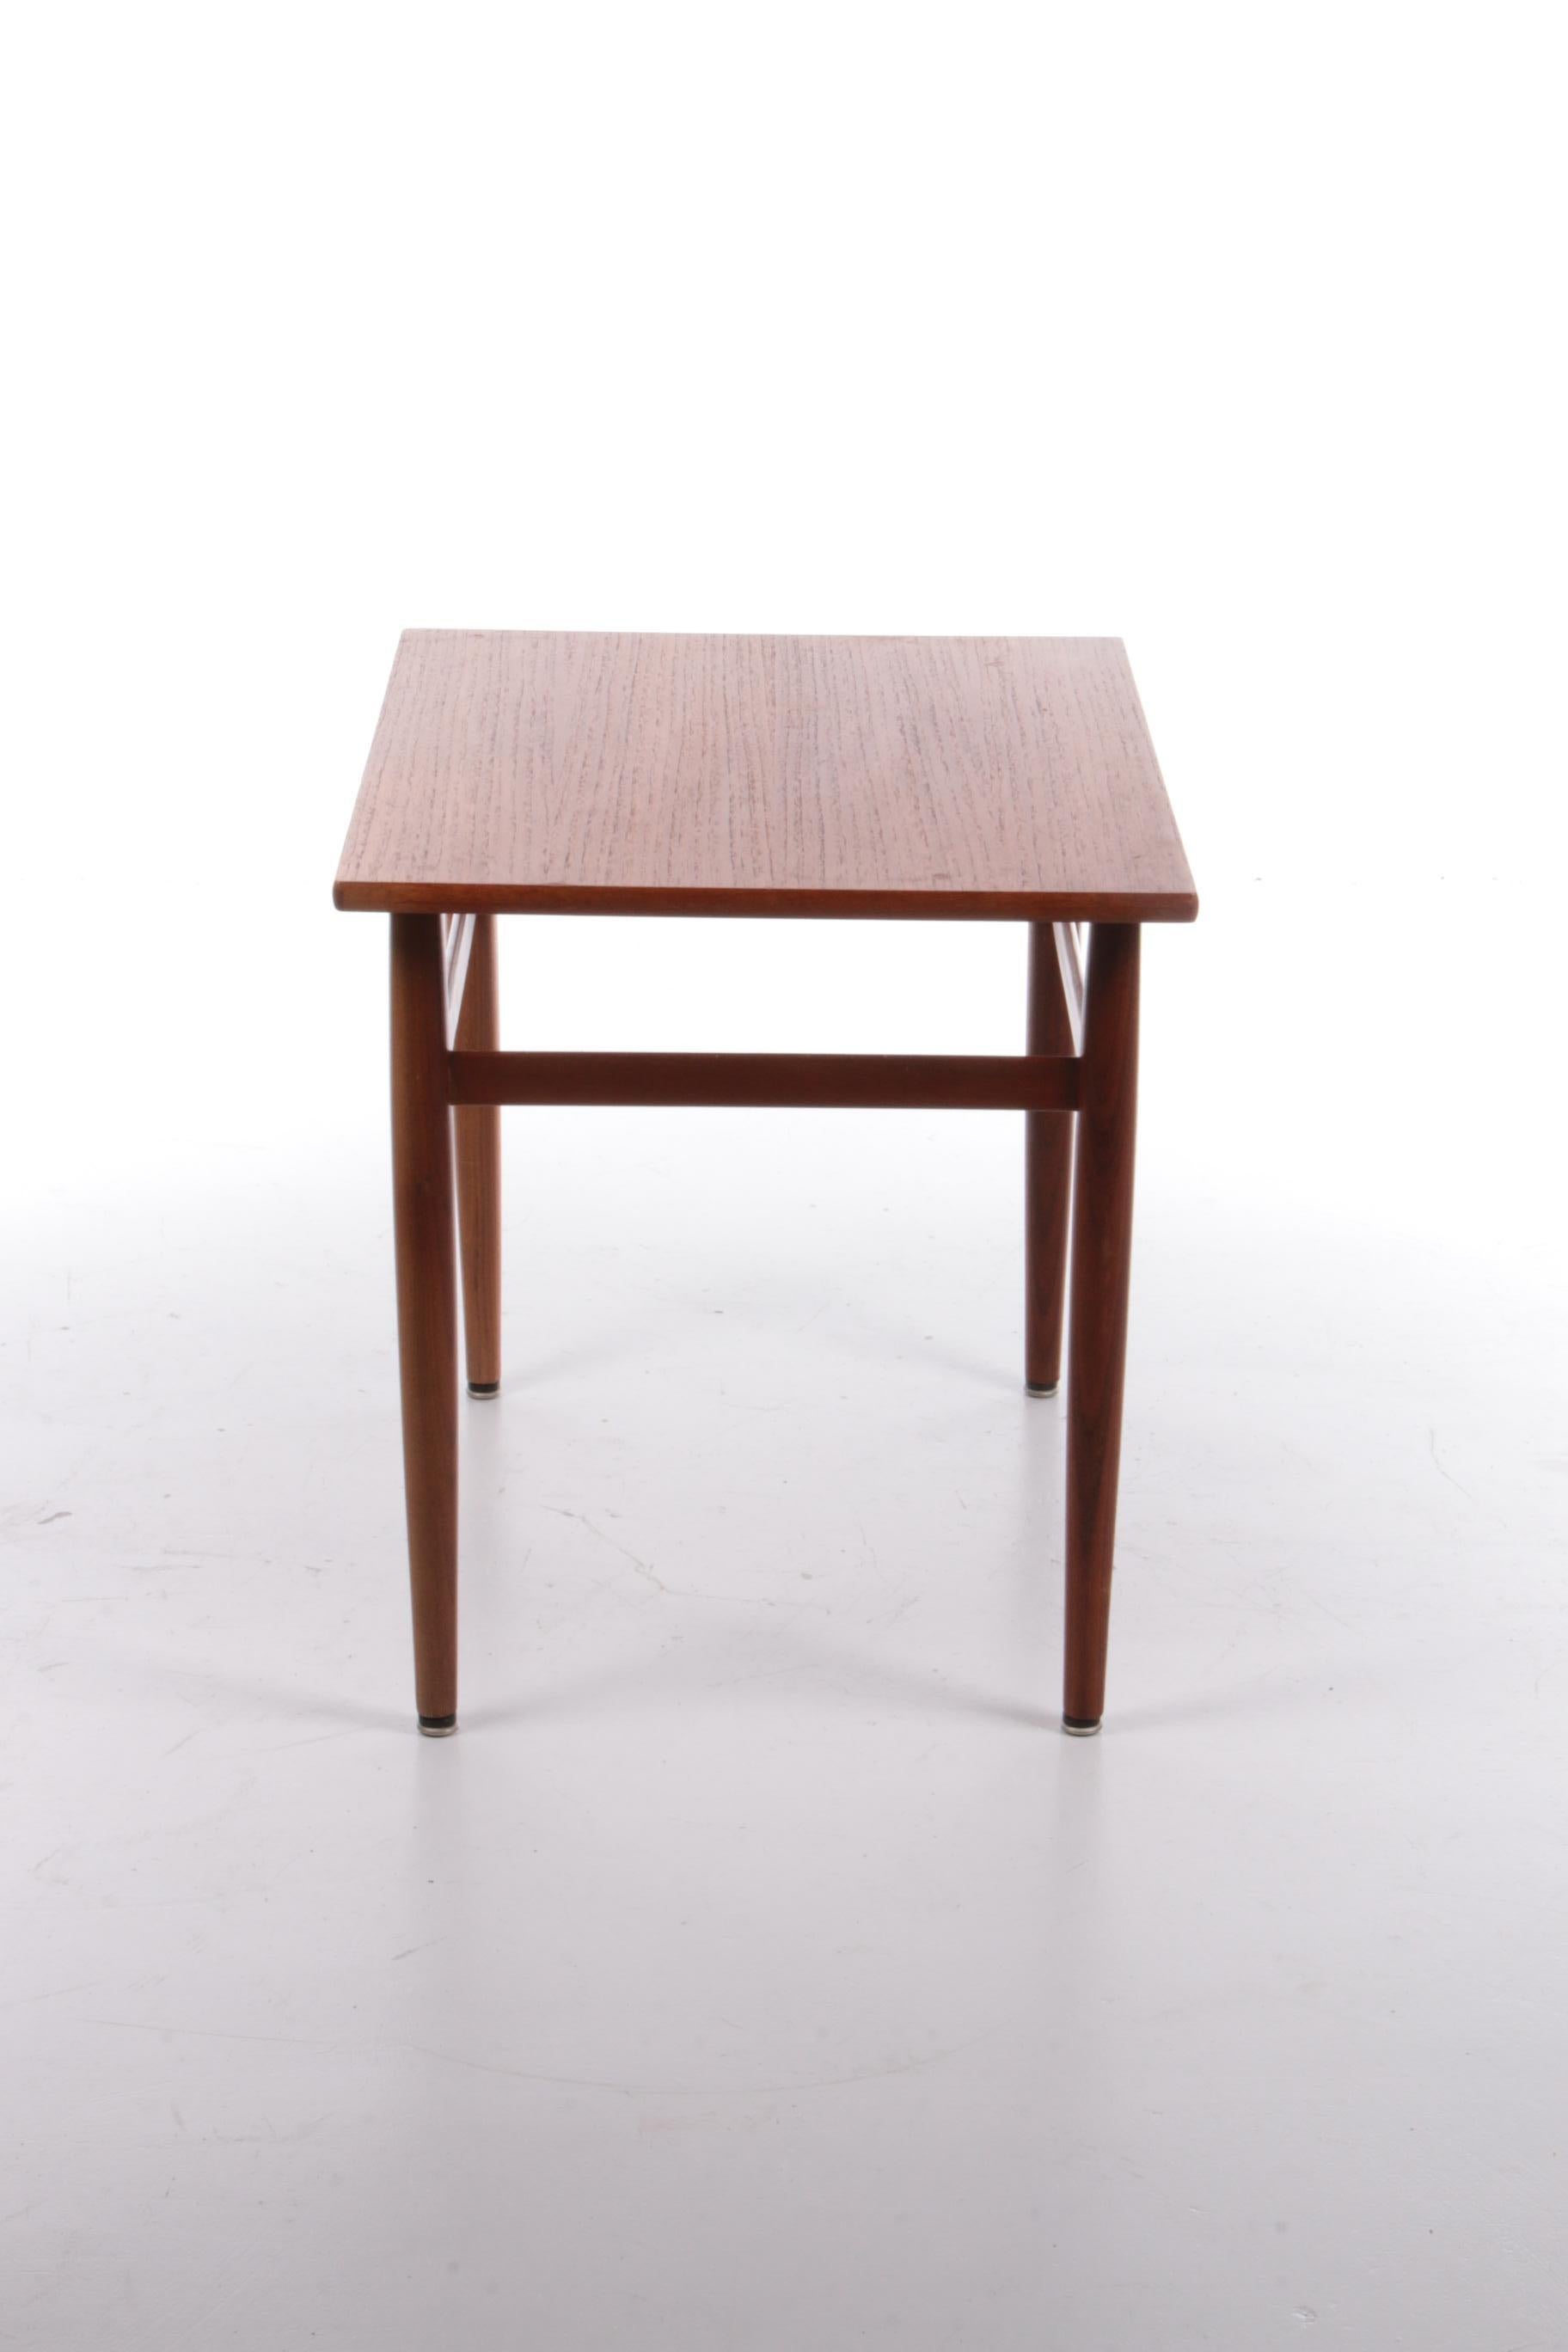 Danish Vintage Teak Wood Side Table, 1960s For Sale